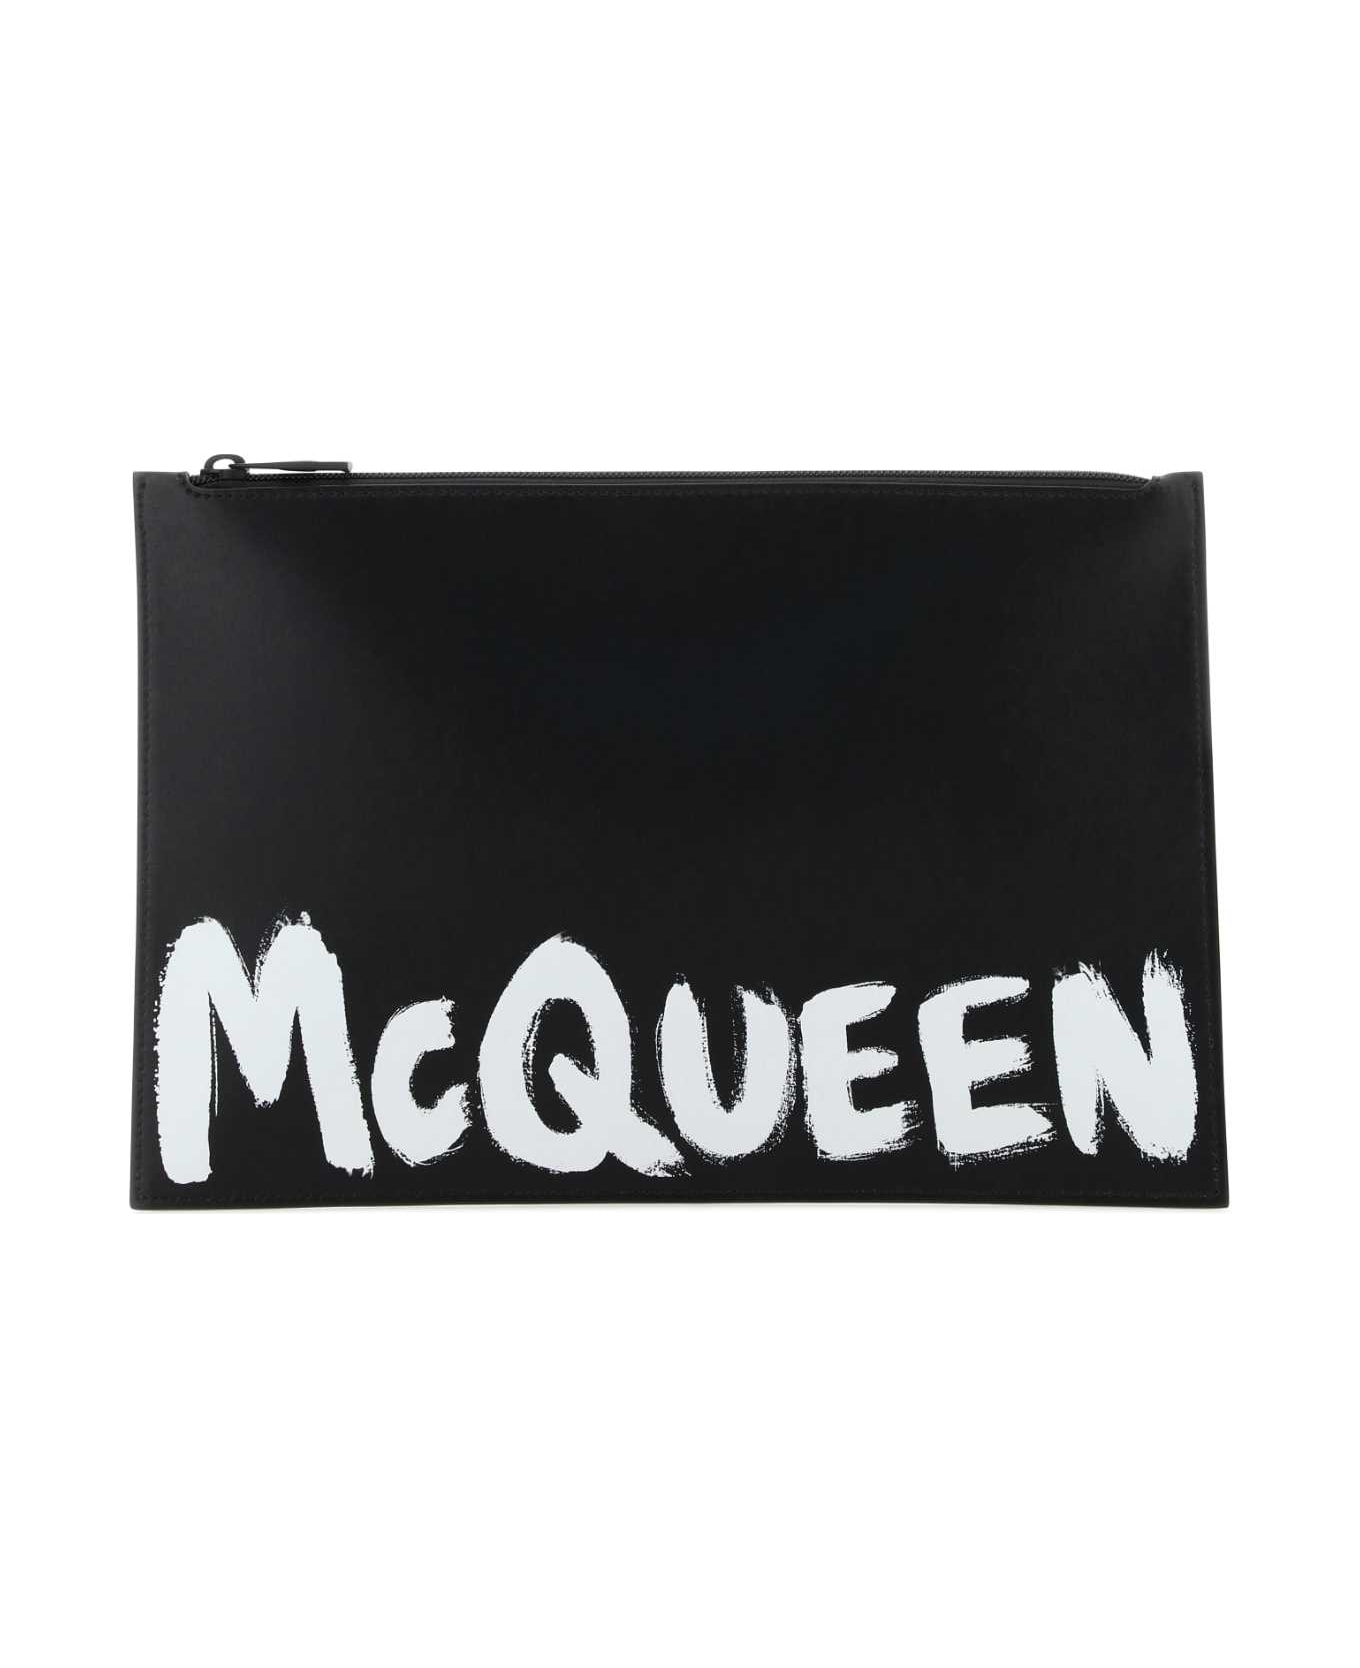 Alexander McQueen Black Leather Clutch - BLACKWHITE